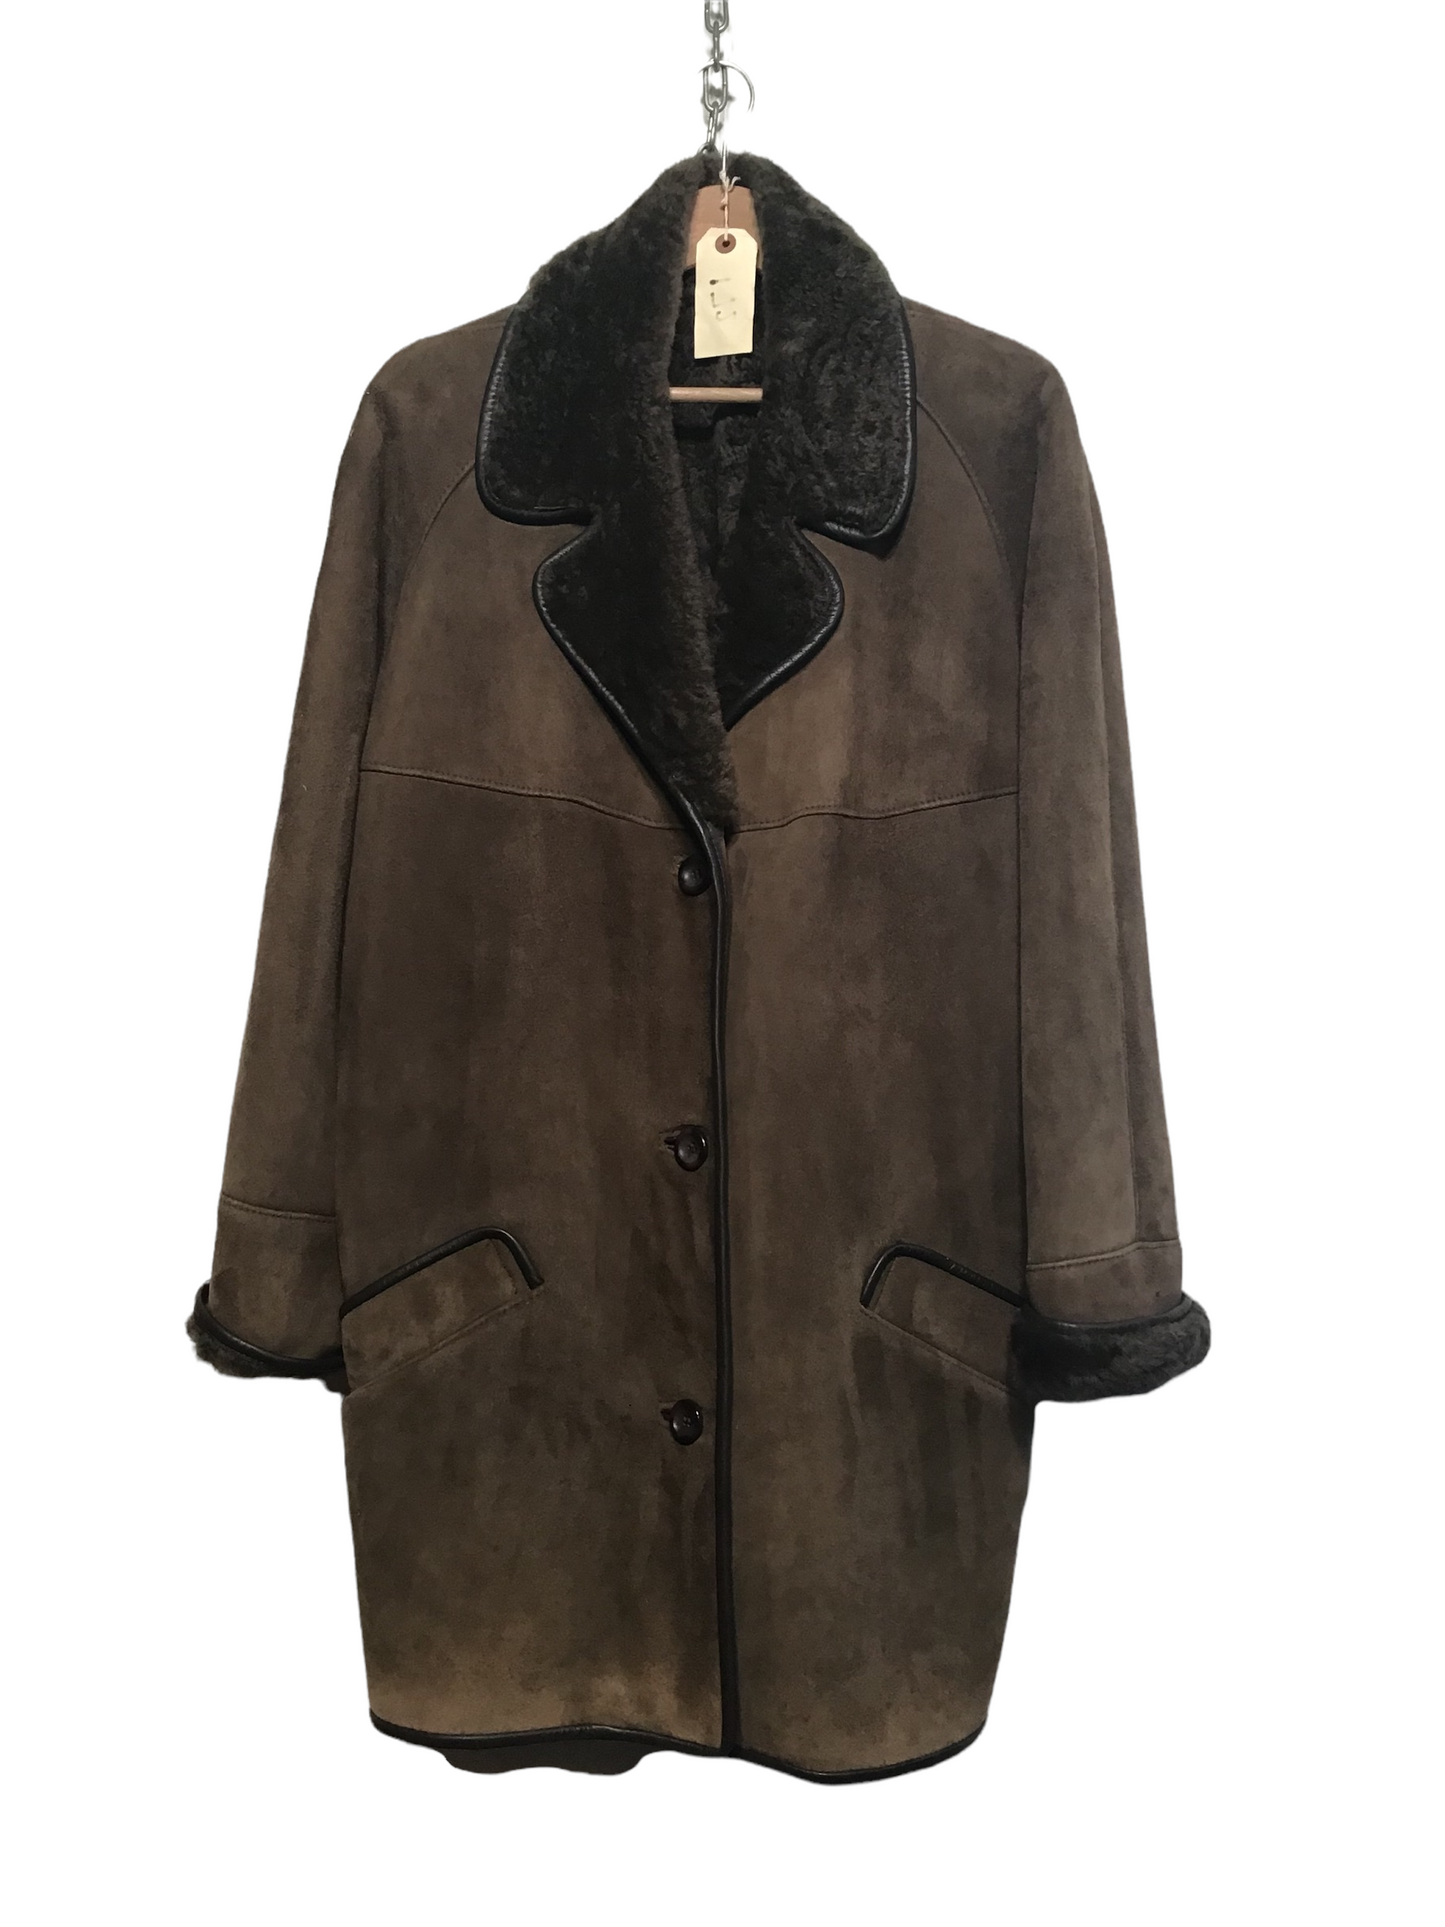 Brown Shearling Long Jacket (Size L)